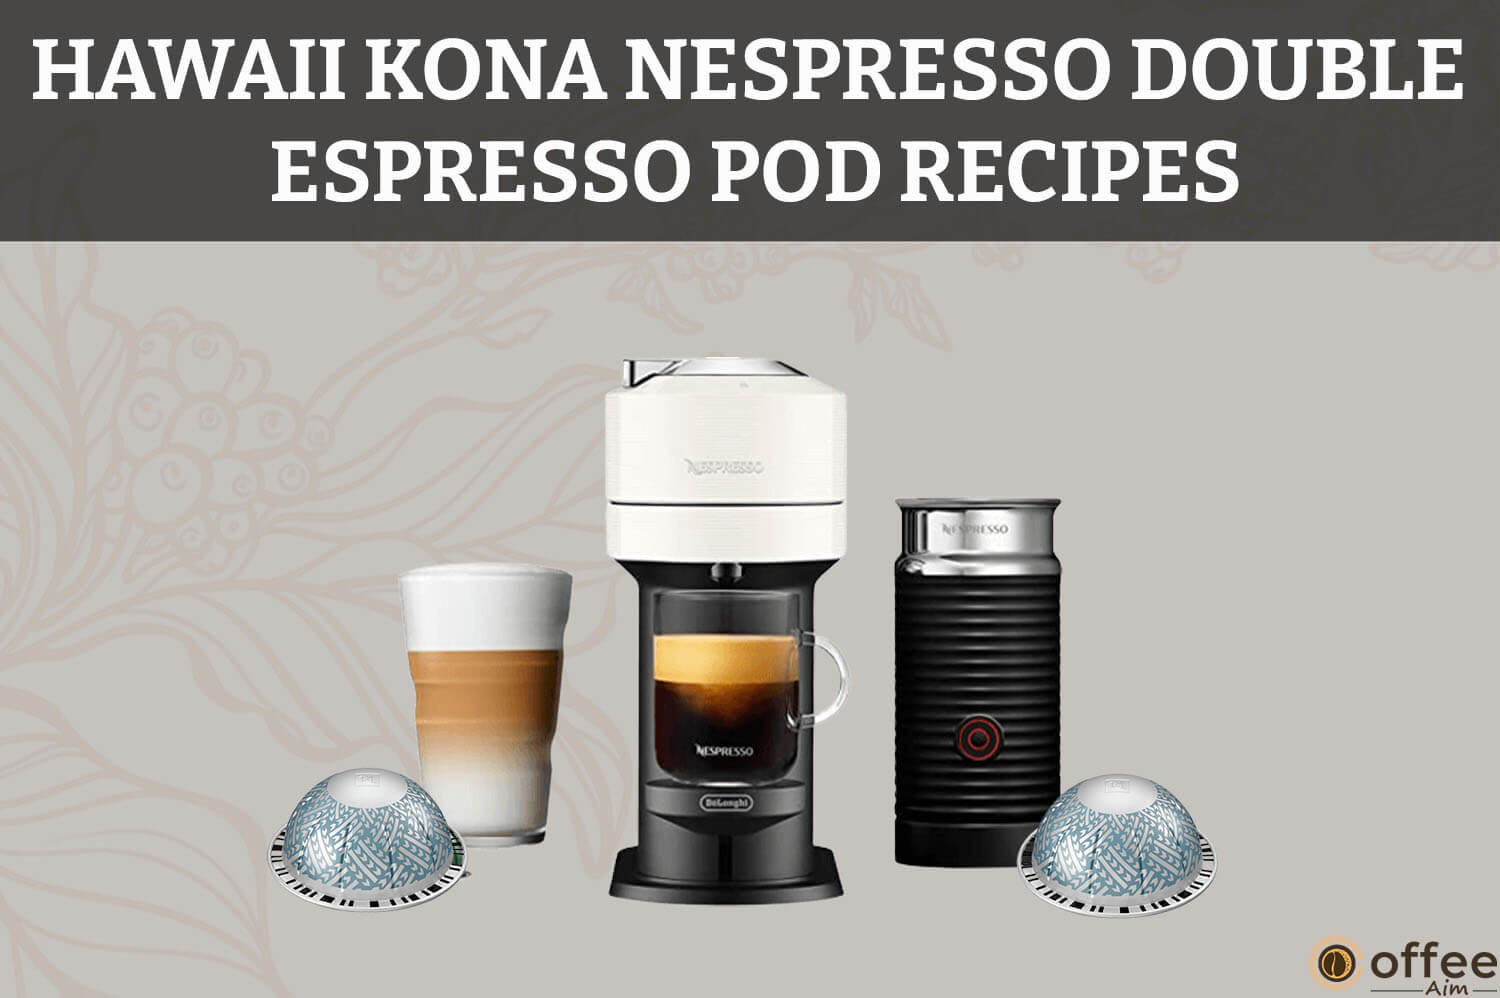 Featured image for the article "Hawaii Kona Nespresso Double Espresso Pod Recipes"